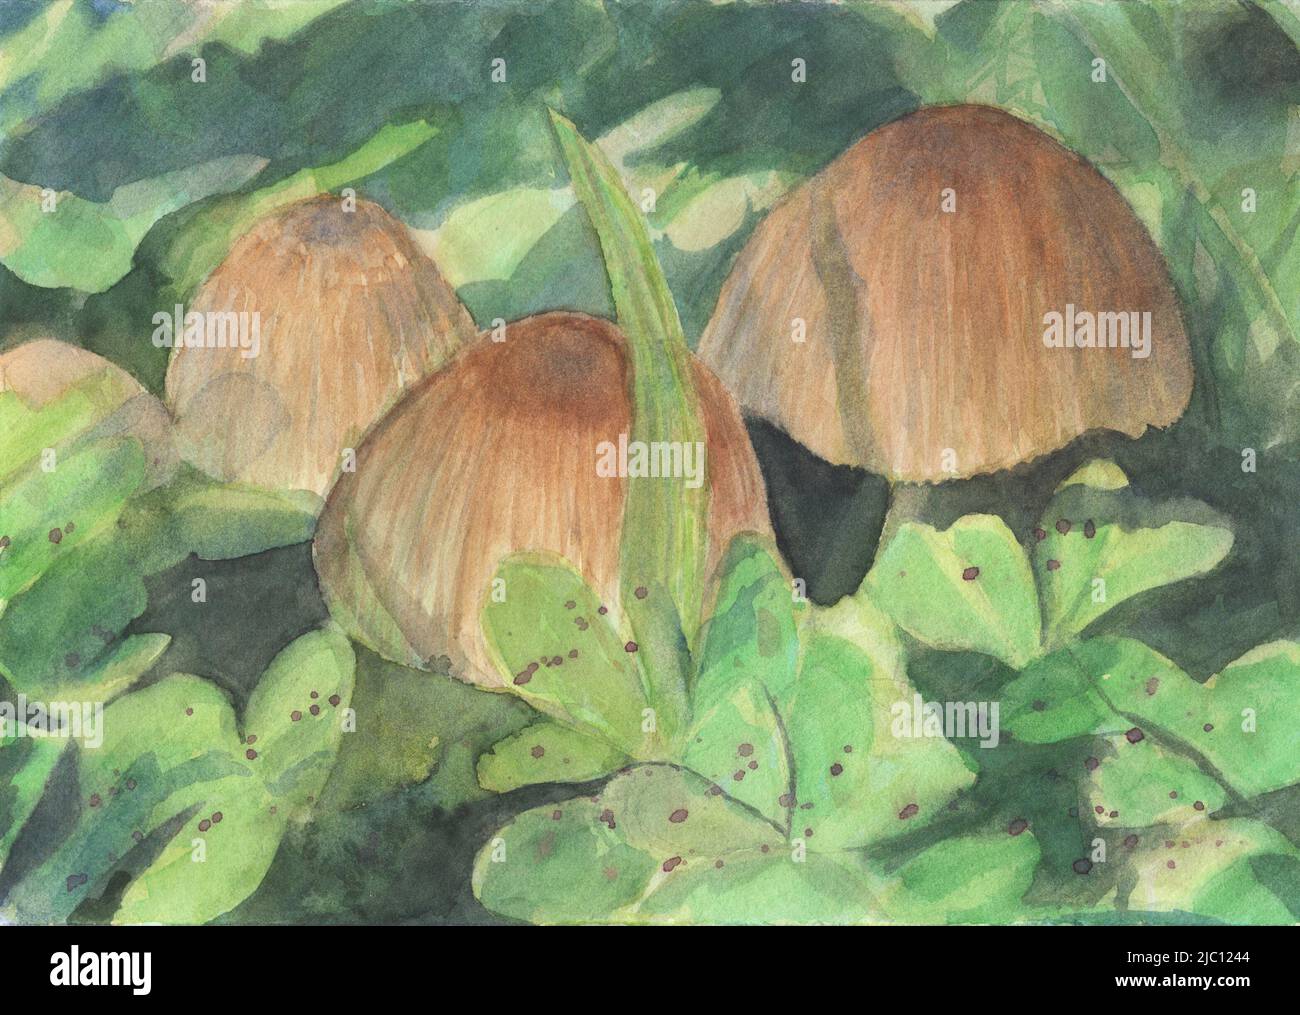 mushrooms watercolor painting art illustration Stock Photo